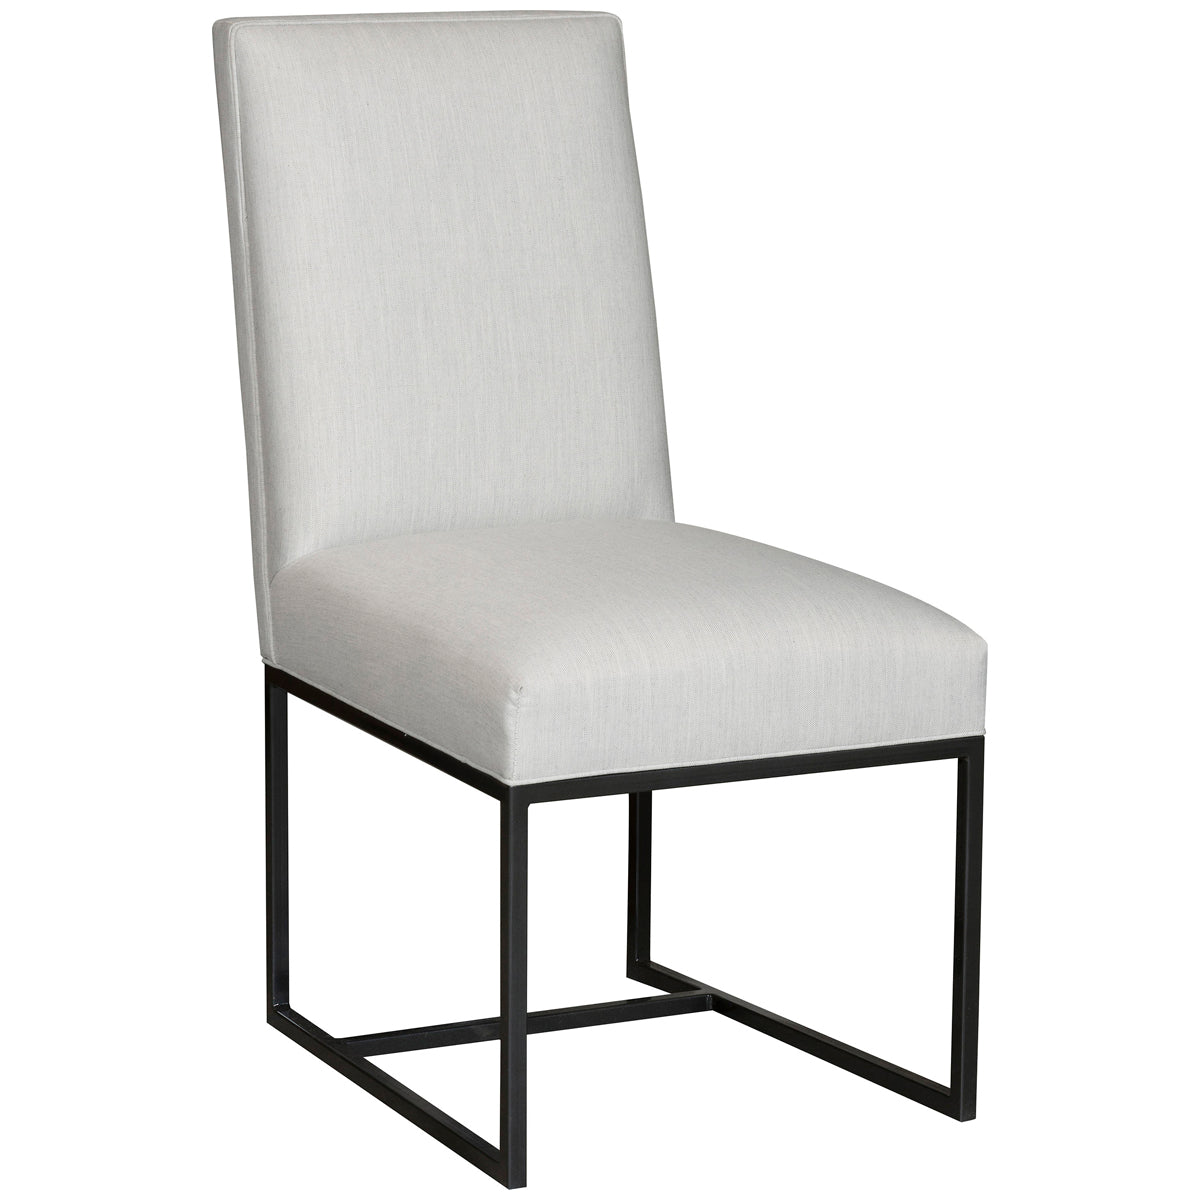 Vanguard Furniture Fremont Outdoor Side Chair